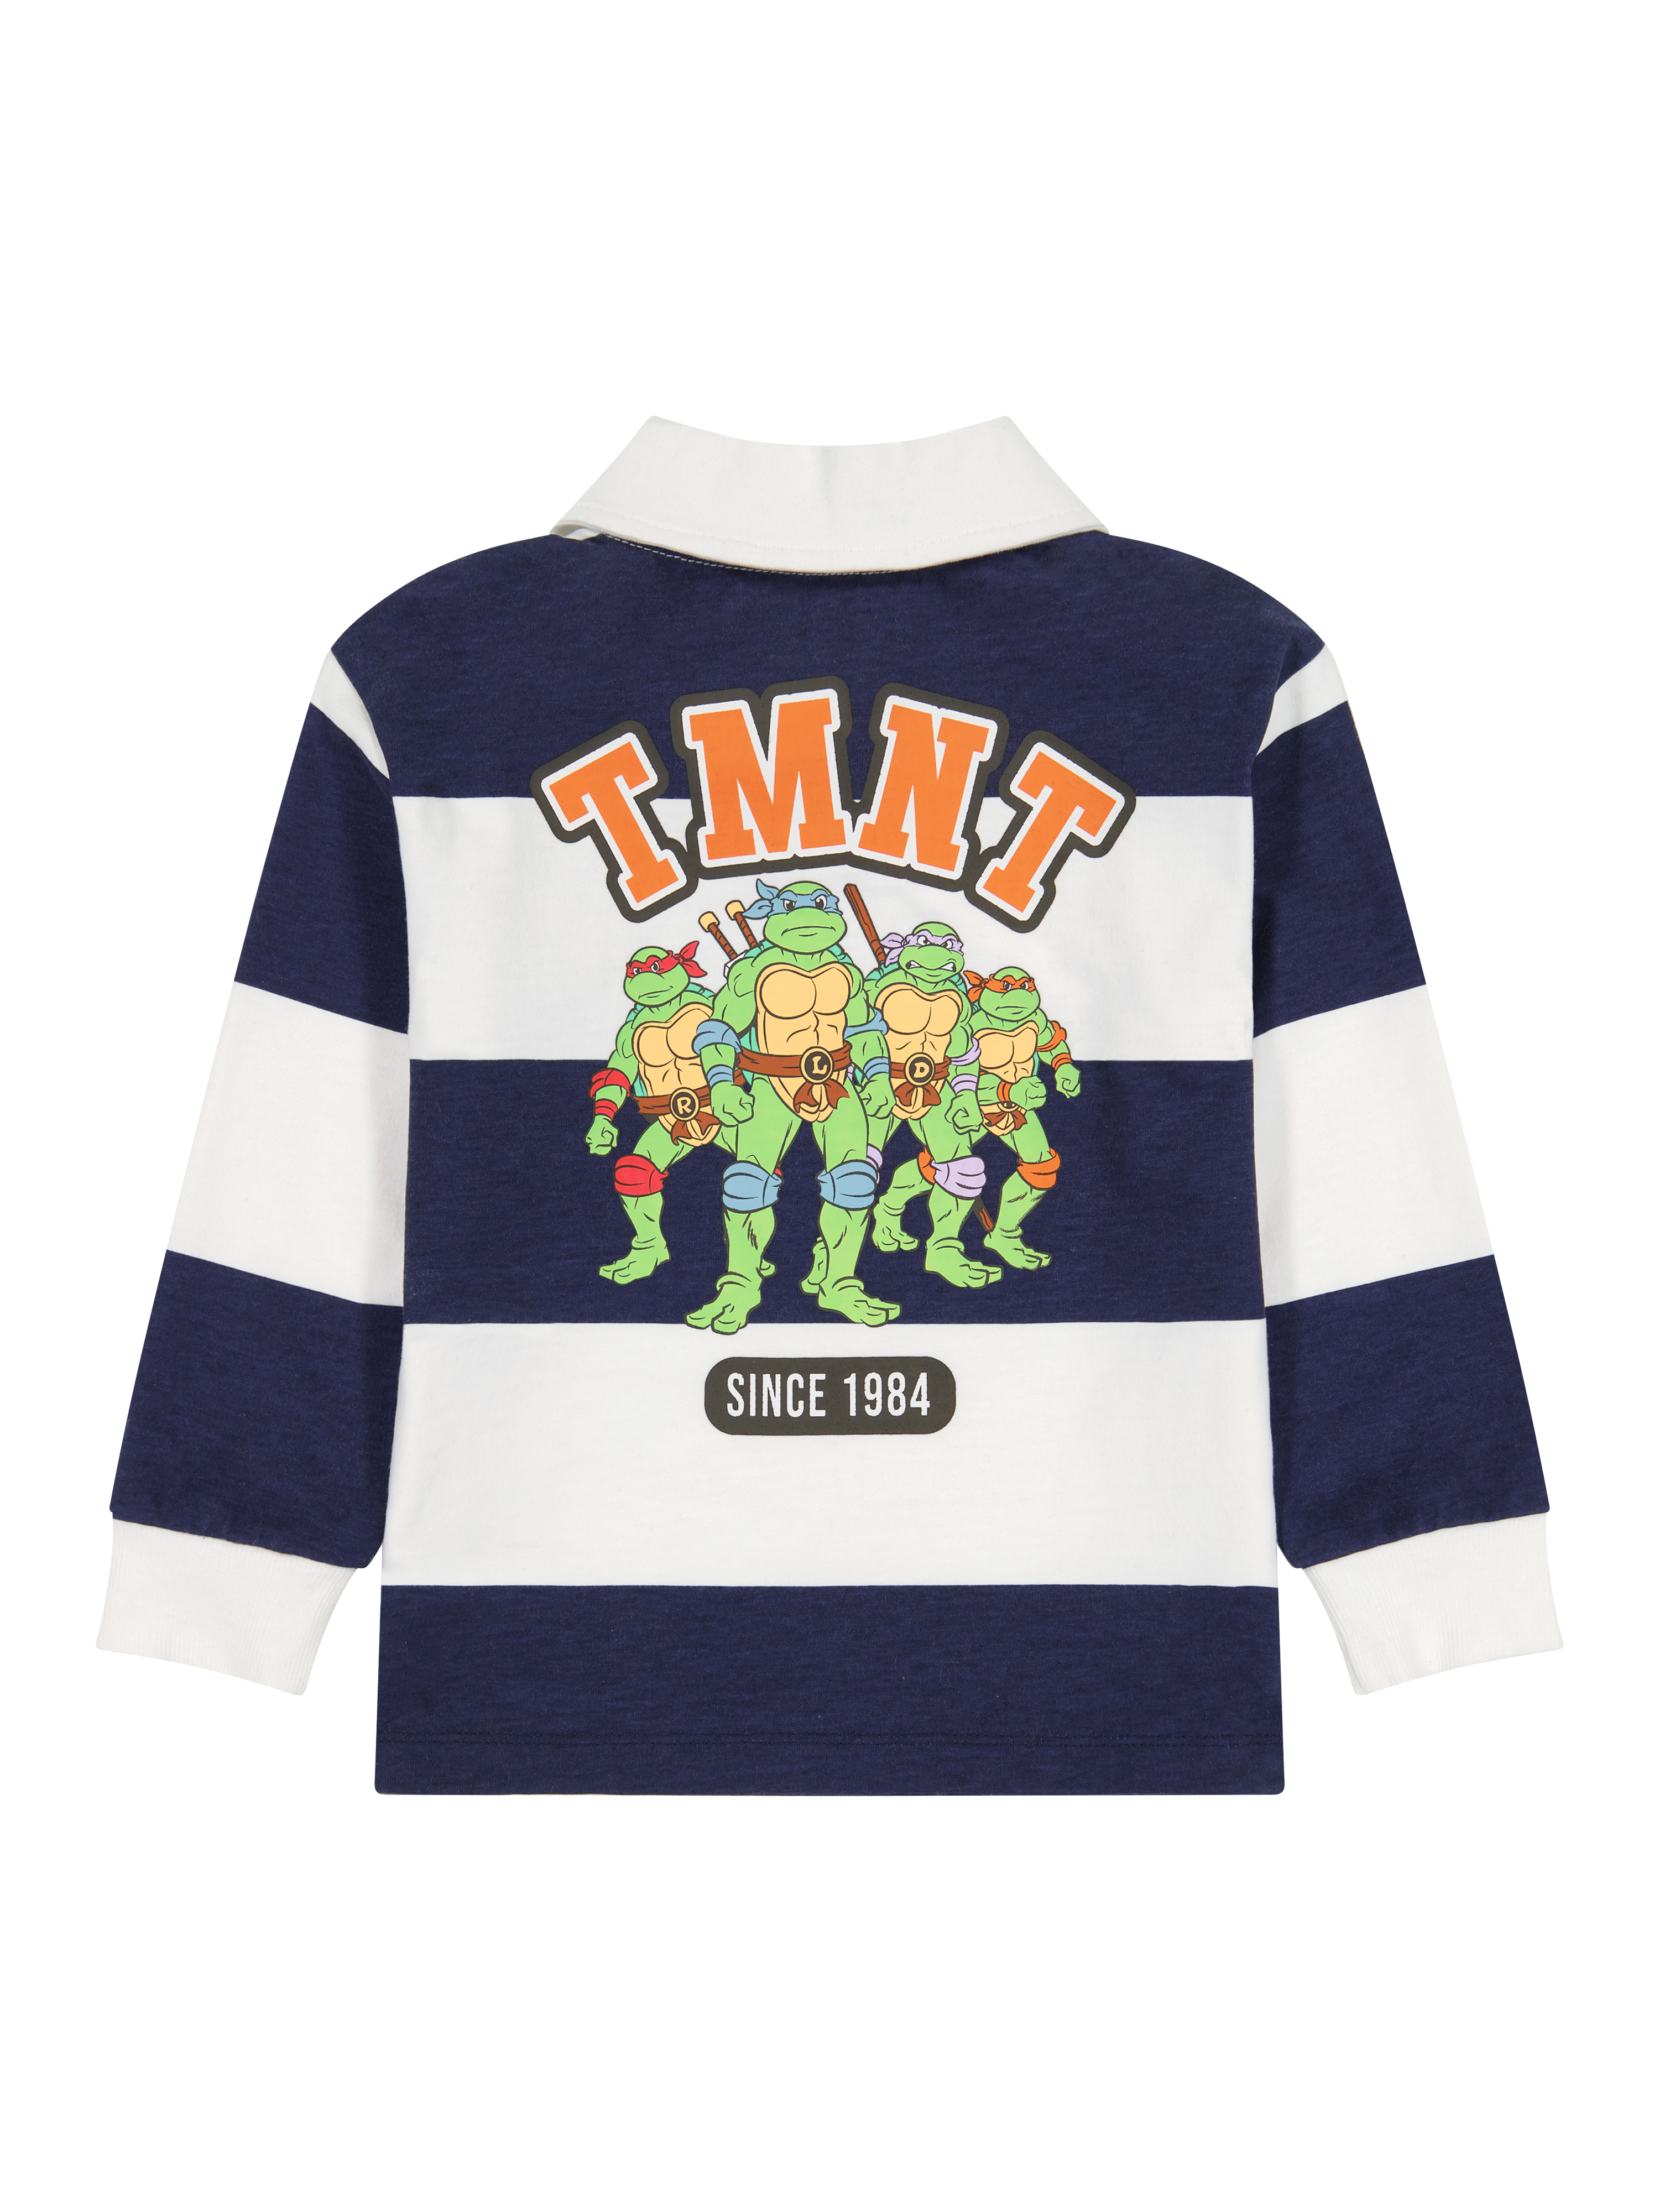 Nickelodeon Teenage Mutant Ninja Turtles Toddler Boy Long Sleeve Rugby Polo Shirt, Sizes 2T-5T - image 4 of 5